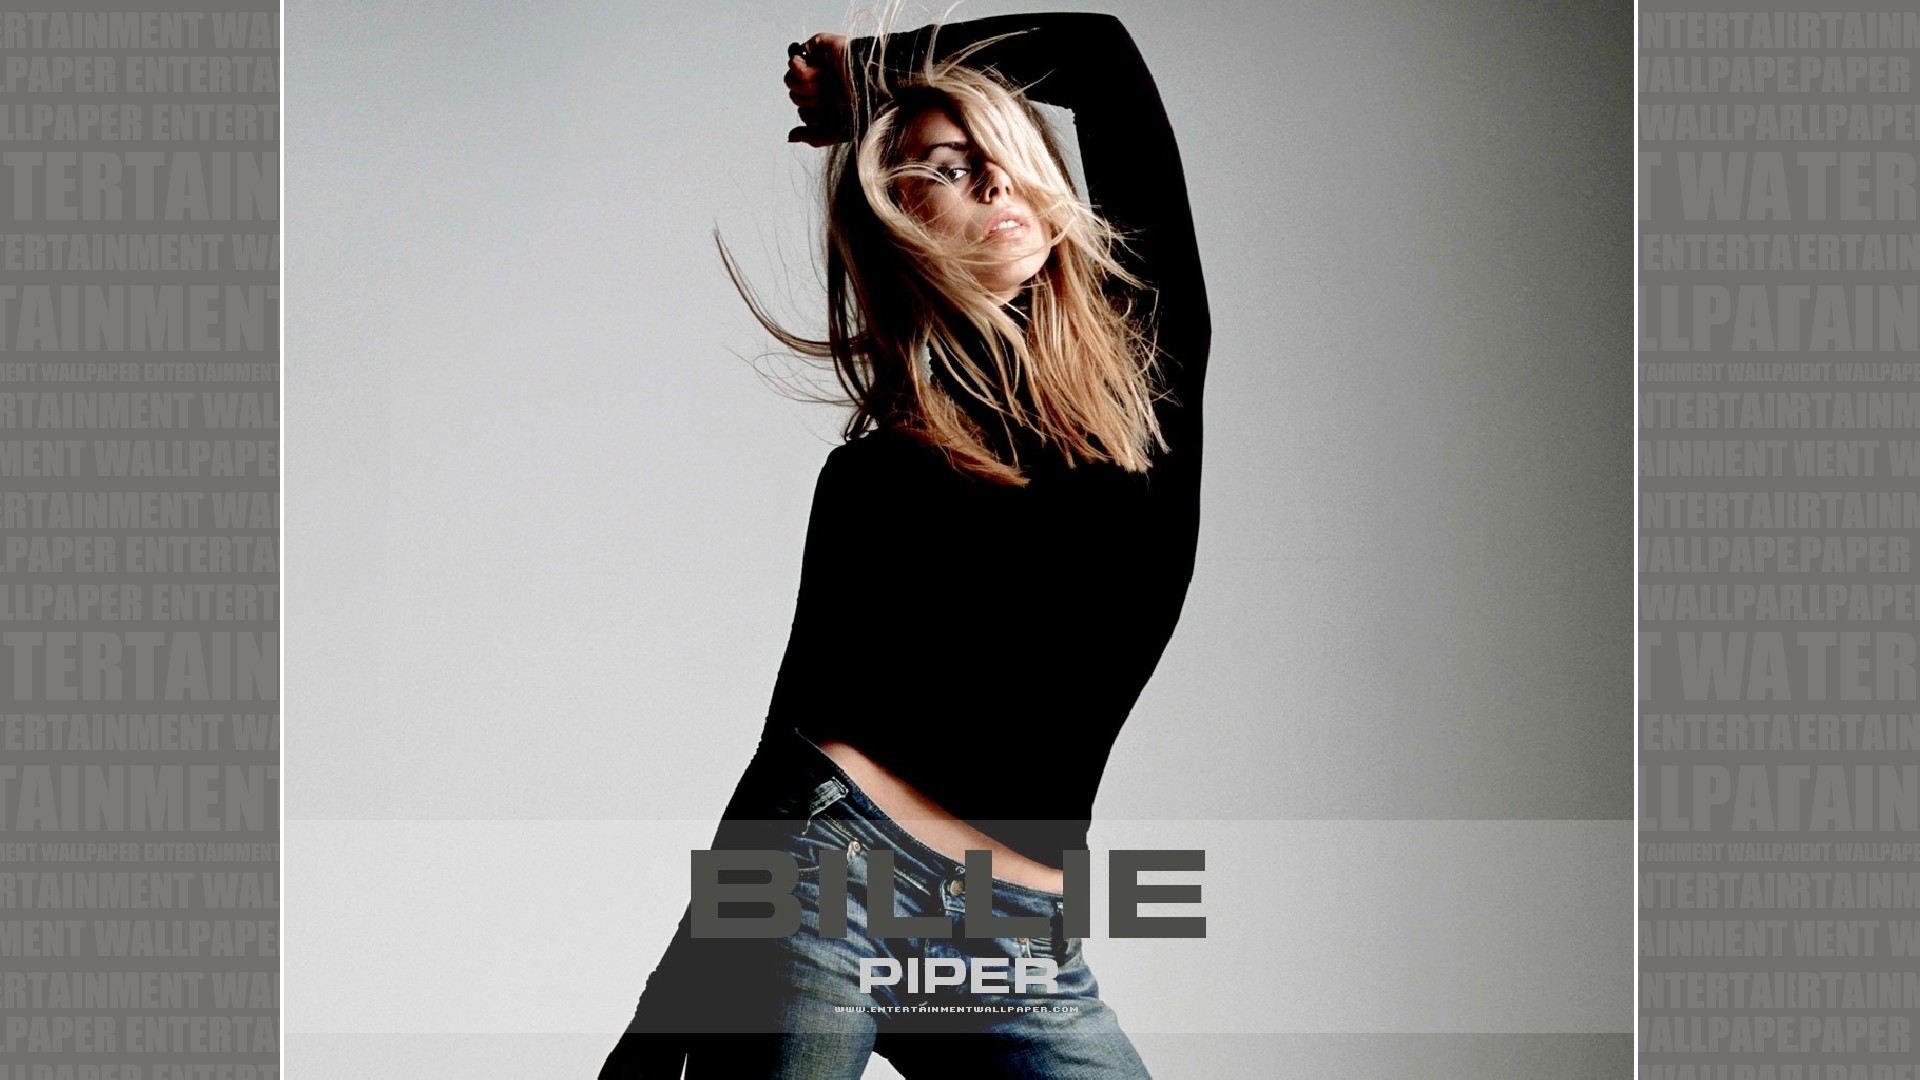 Billie Piper - Billie Piper Wallpaper (647585) - Fanpop